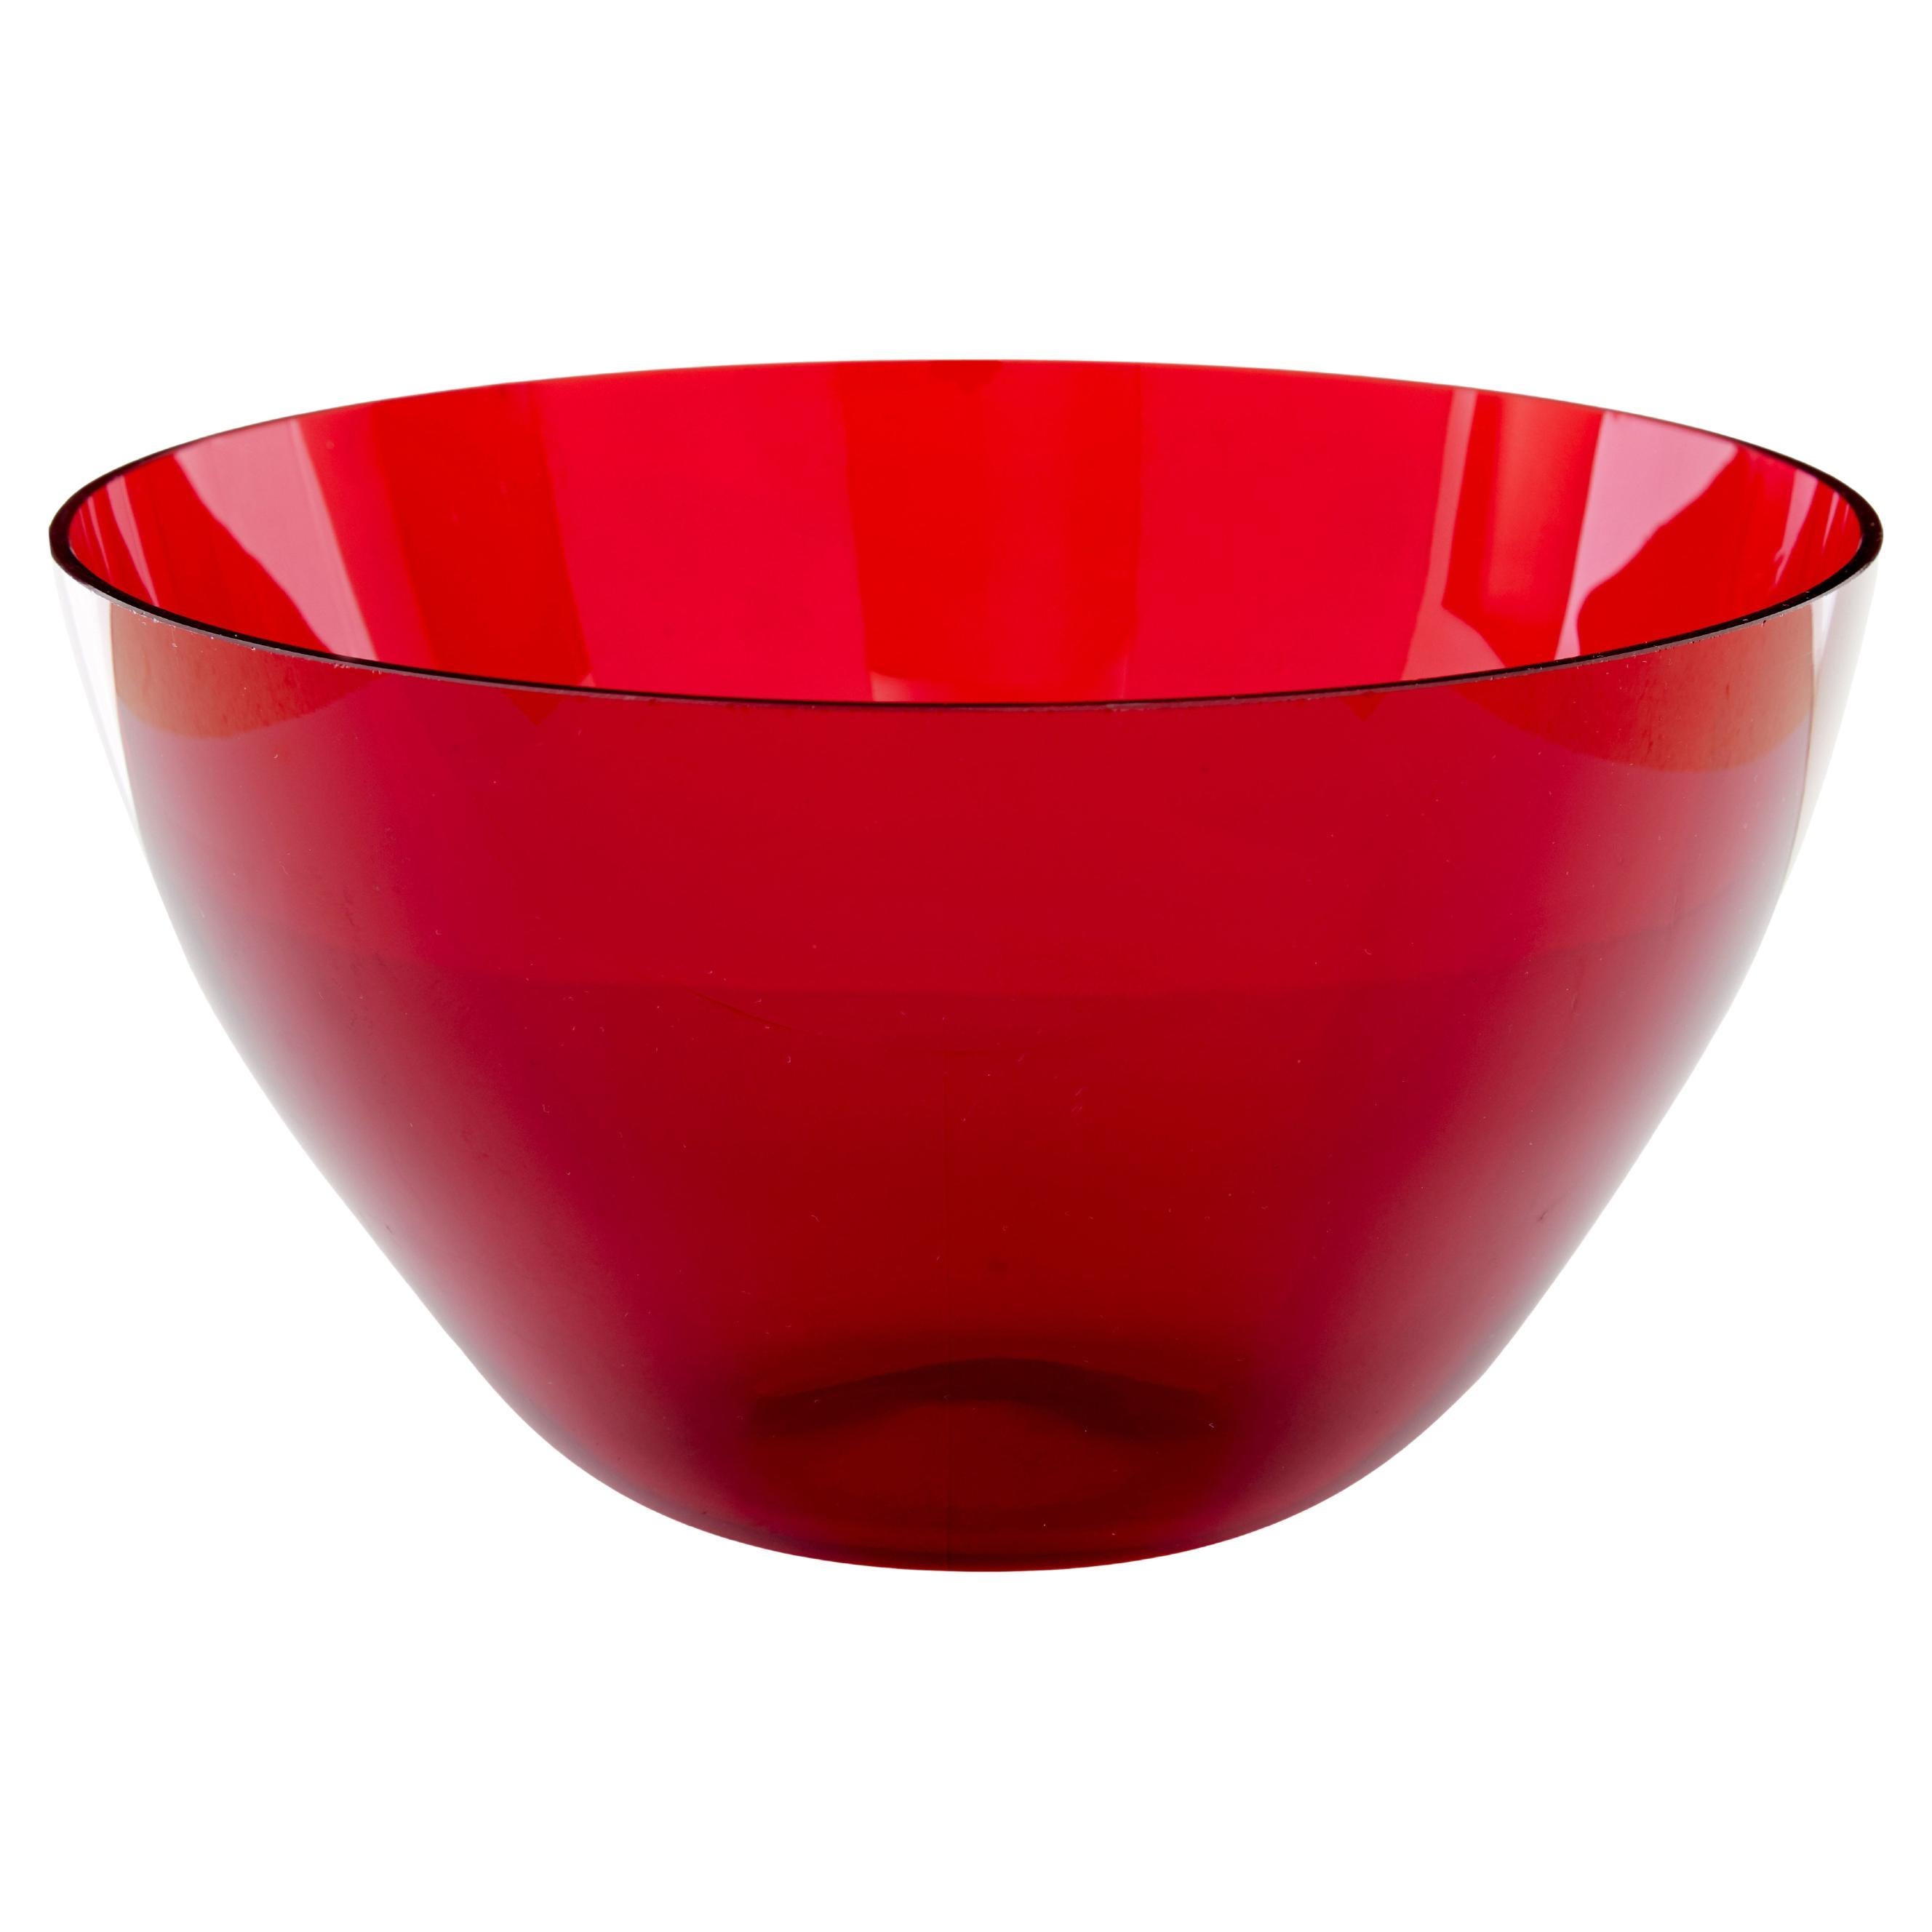 Mid century red glass fruit bowl by Monica Bratt